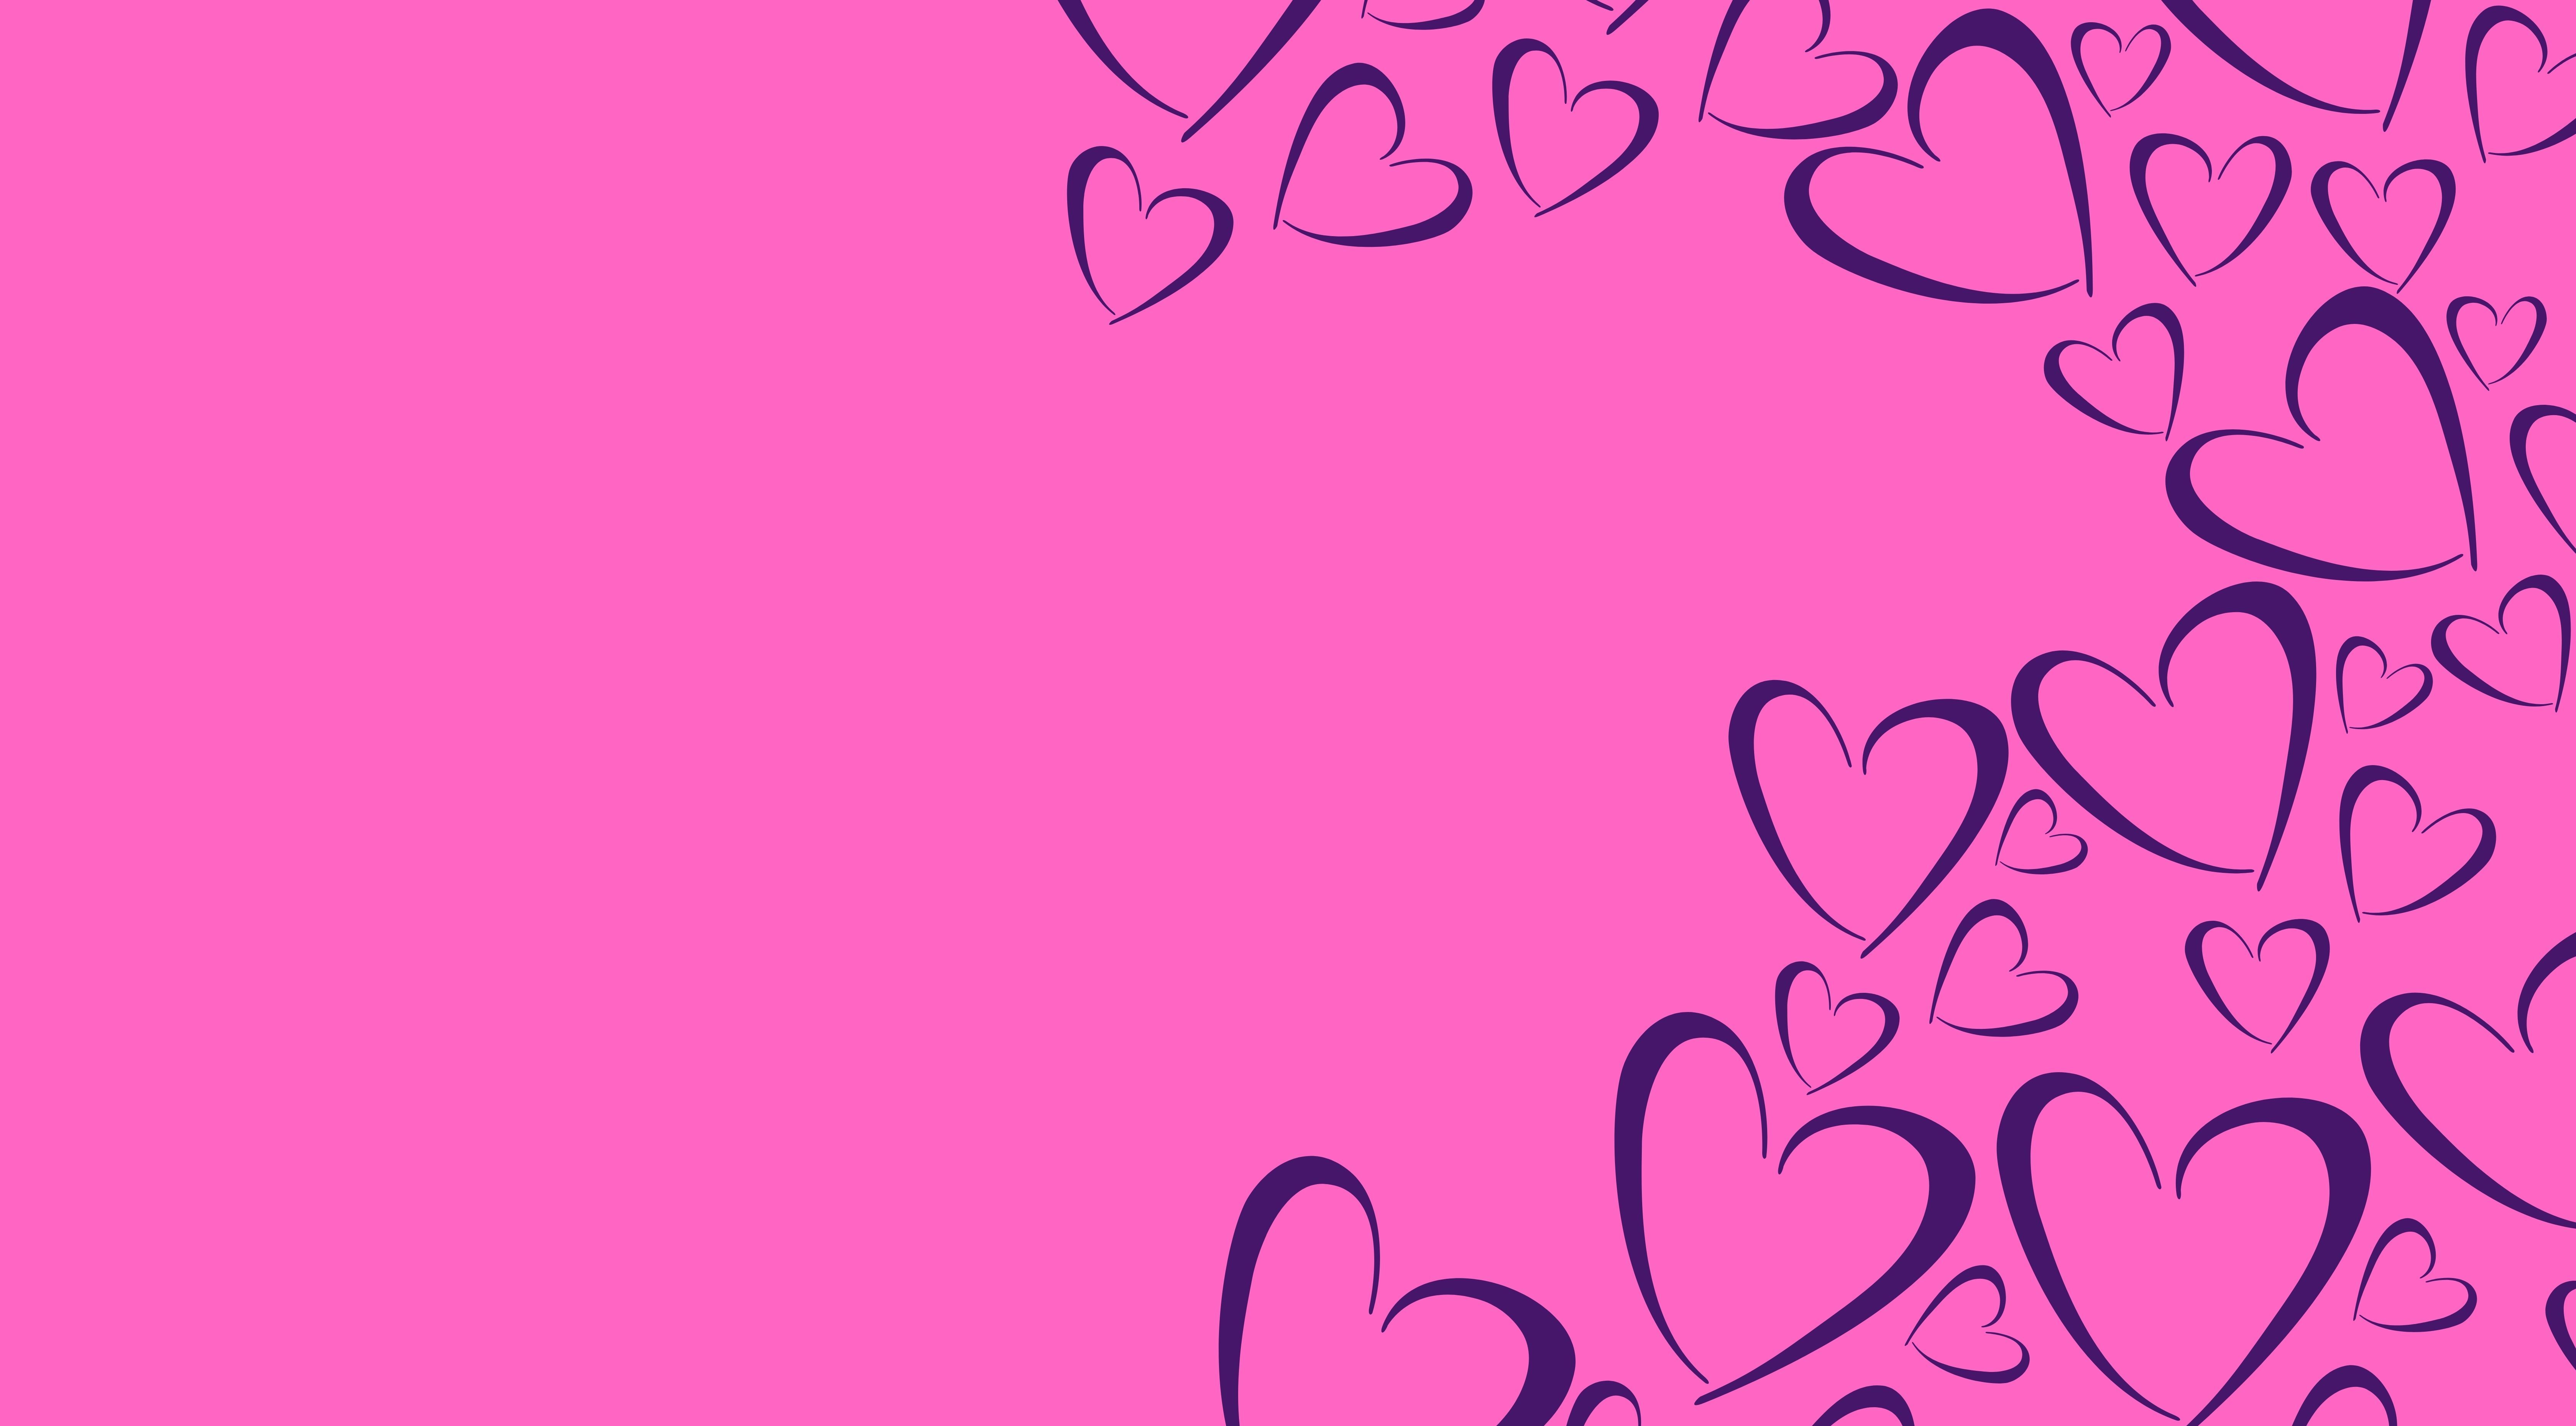 Purple hearts swirl on a pink background